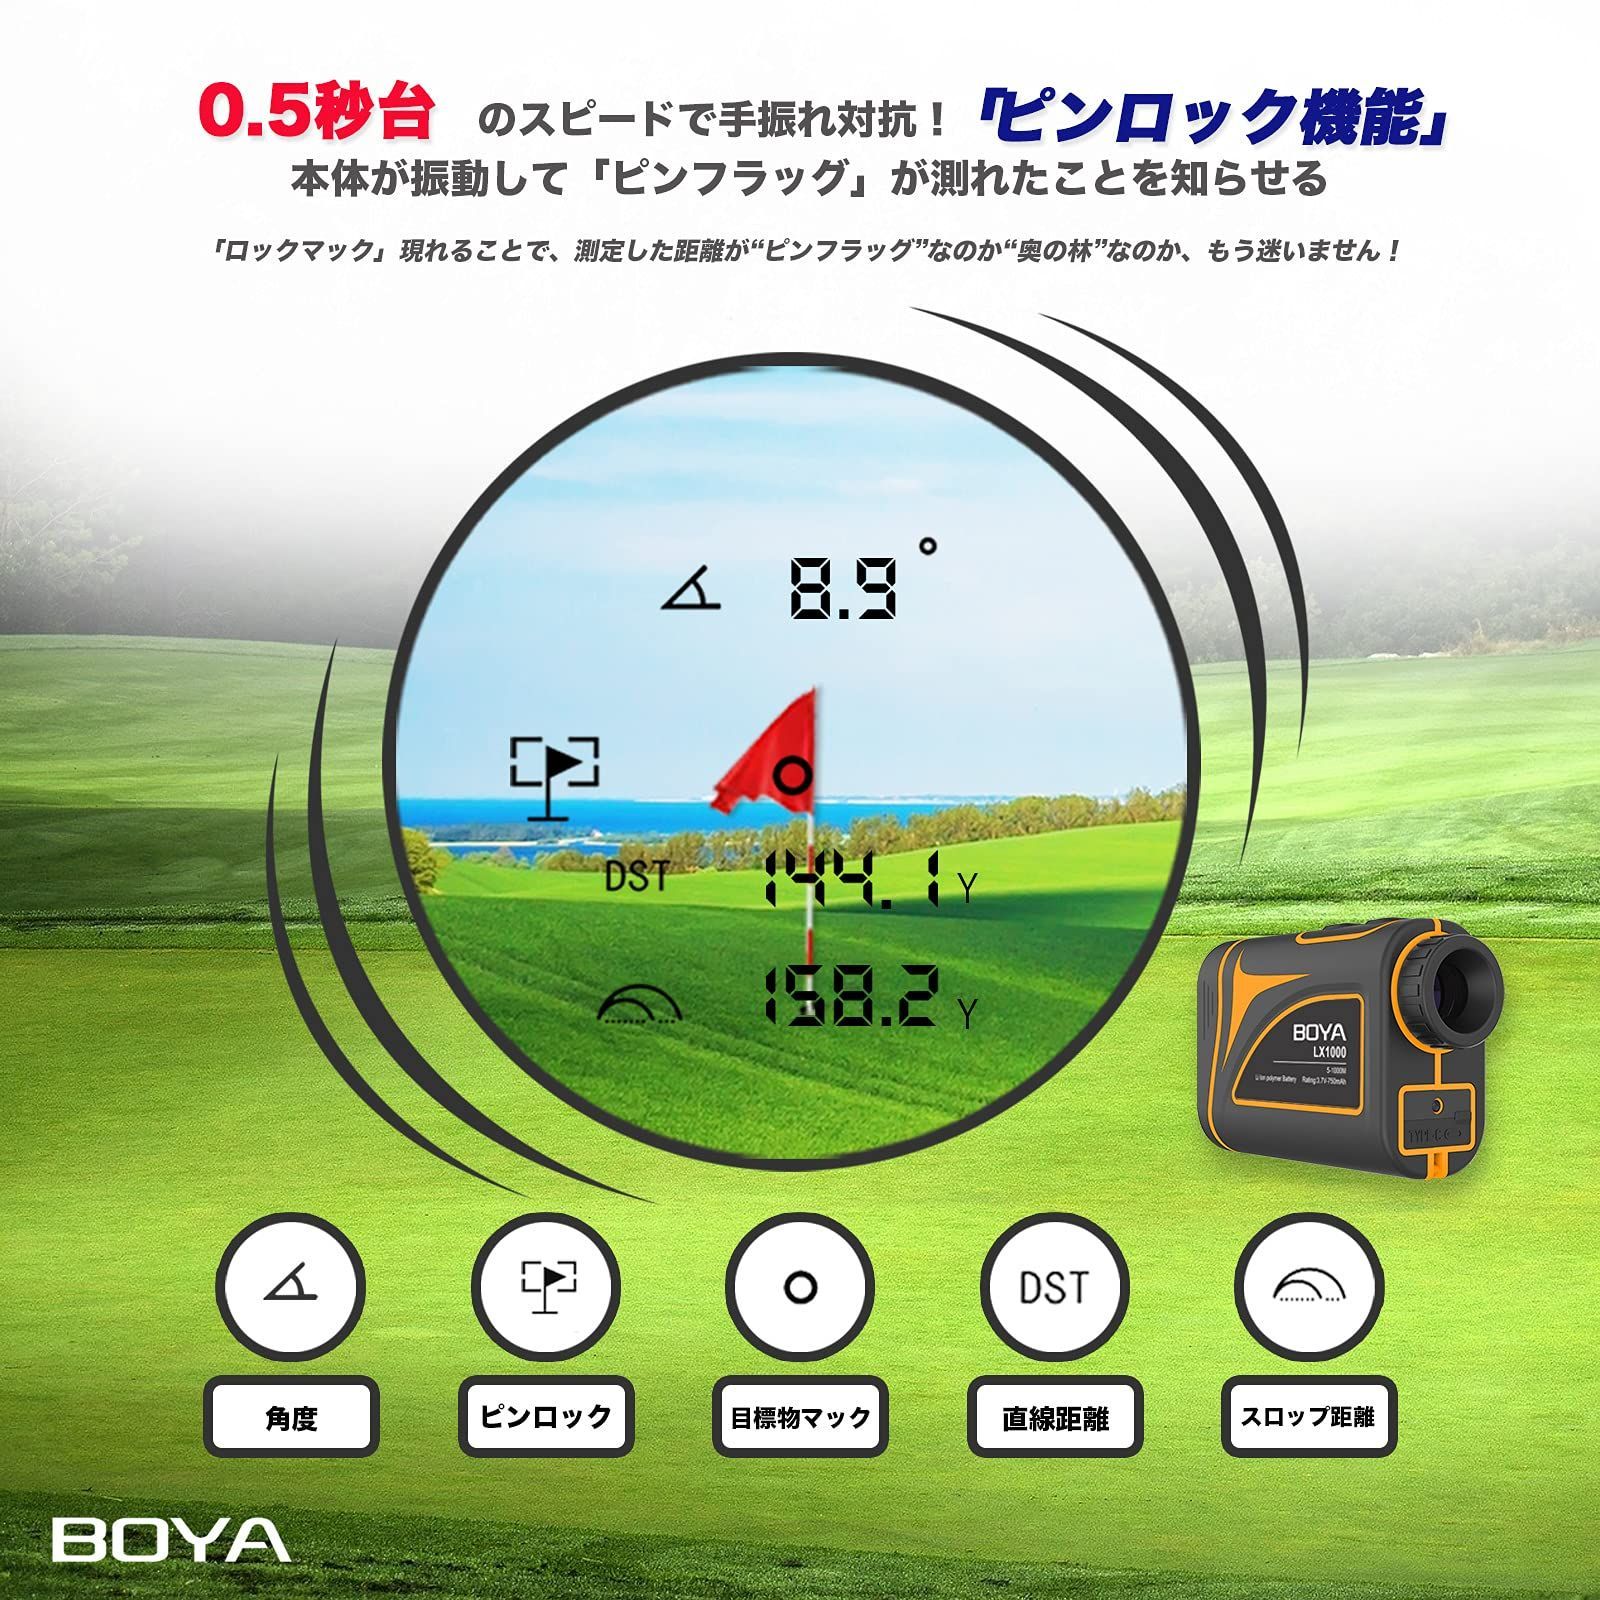 BOYA ゴルフ レーザー距離計 正規品 スロープ振動機能 日本語